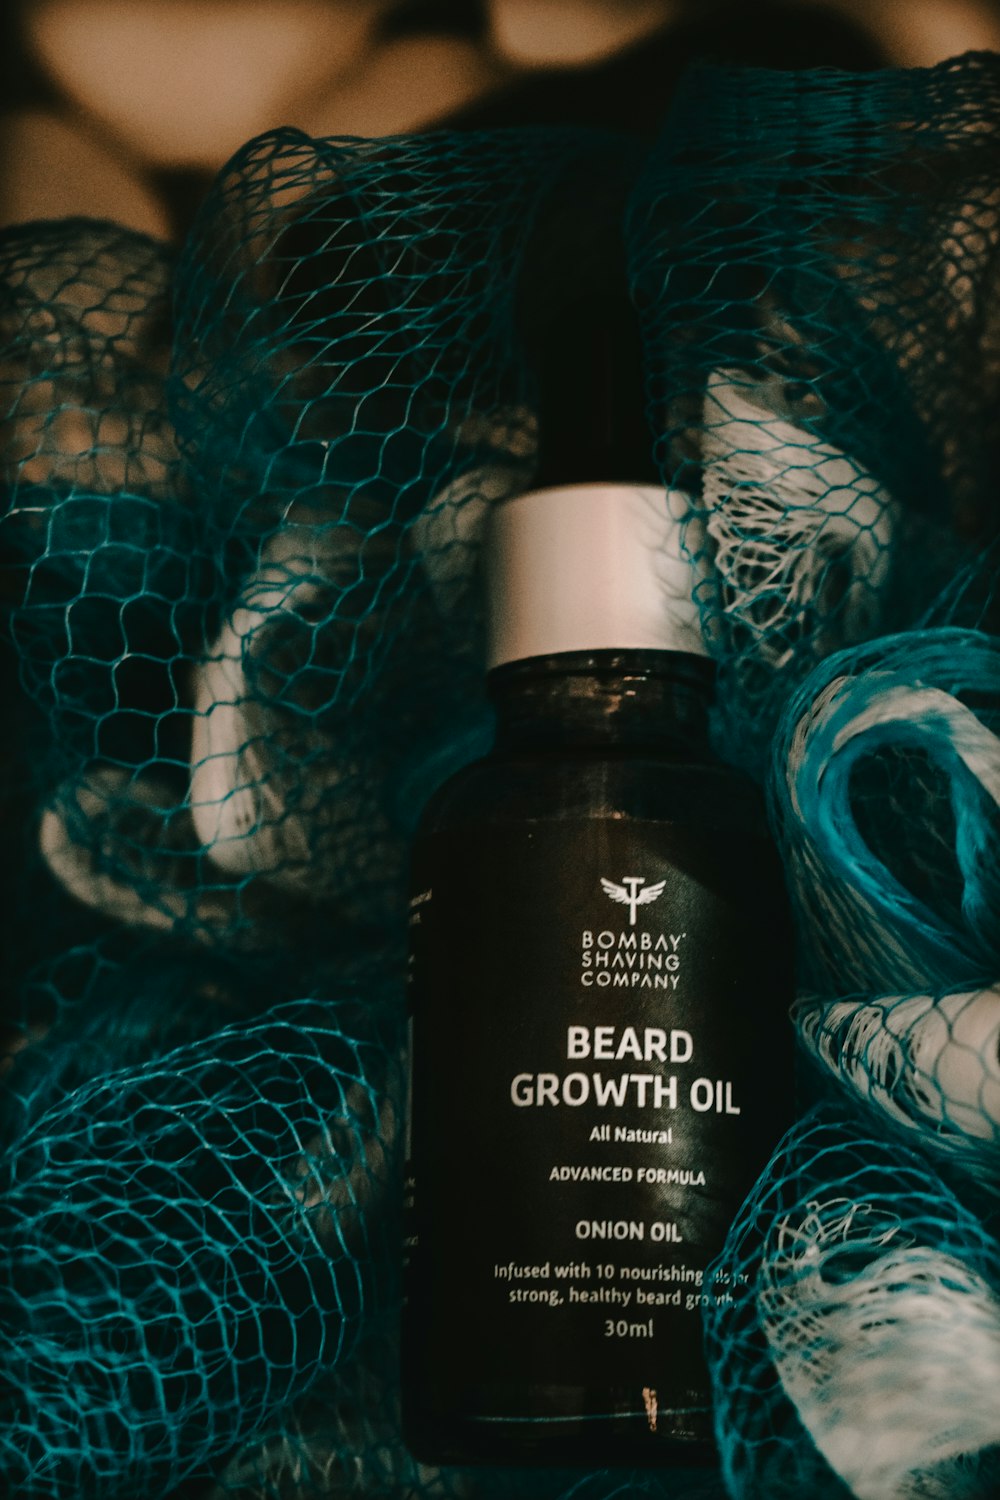 a bottle of beard growth oil sitting on top of a net